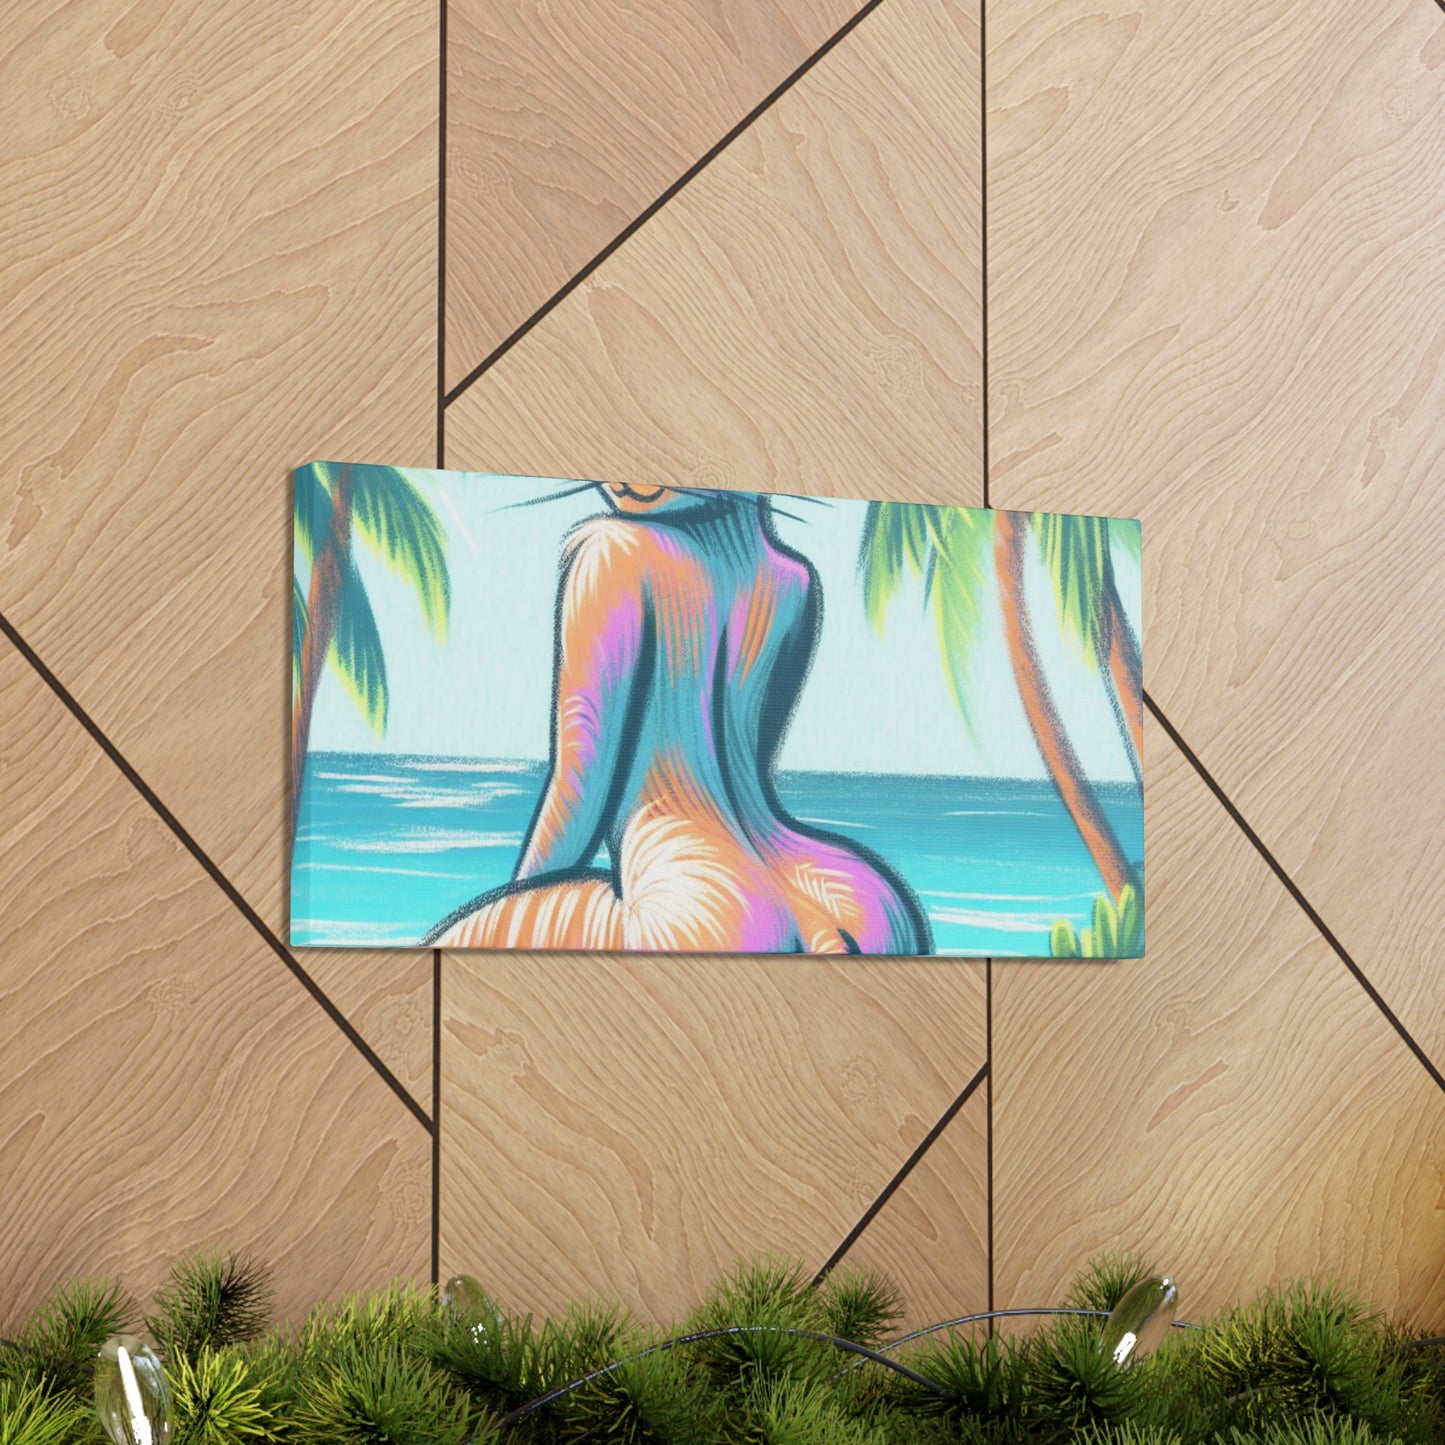 Slim Thick Tropical Kitty Canvas Art: Paradise Beach Decor Canvas Gallery Wraps